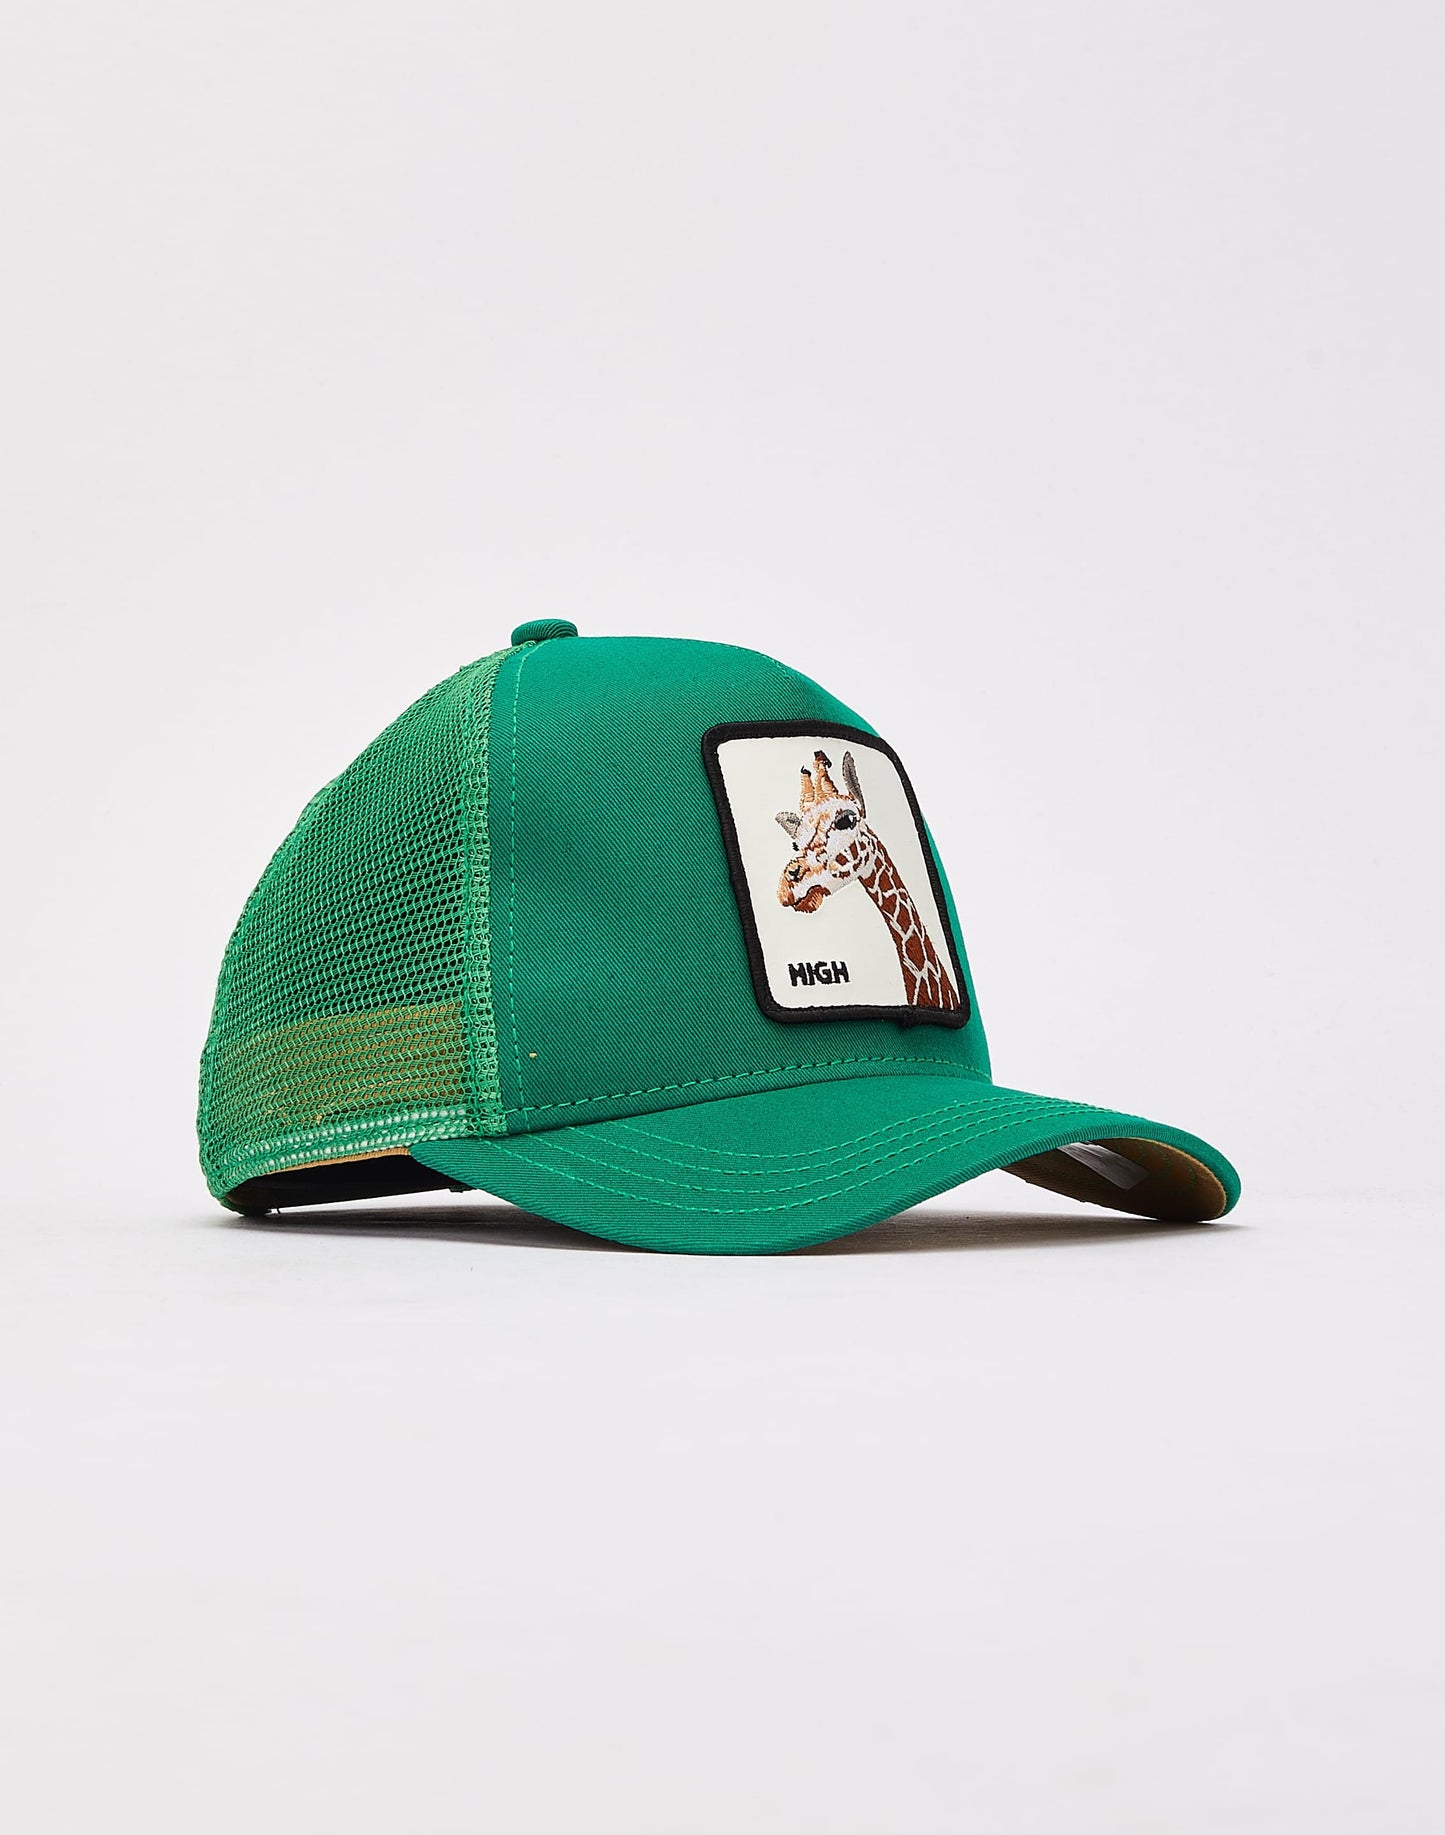 So High Green Trucker Hat - Goorin Bros